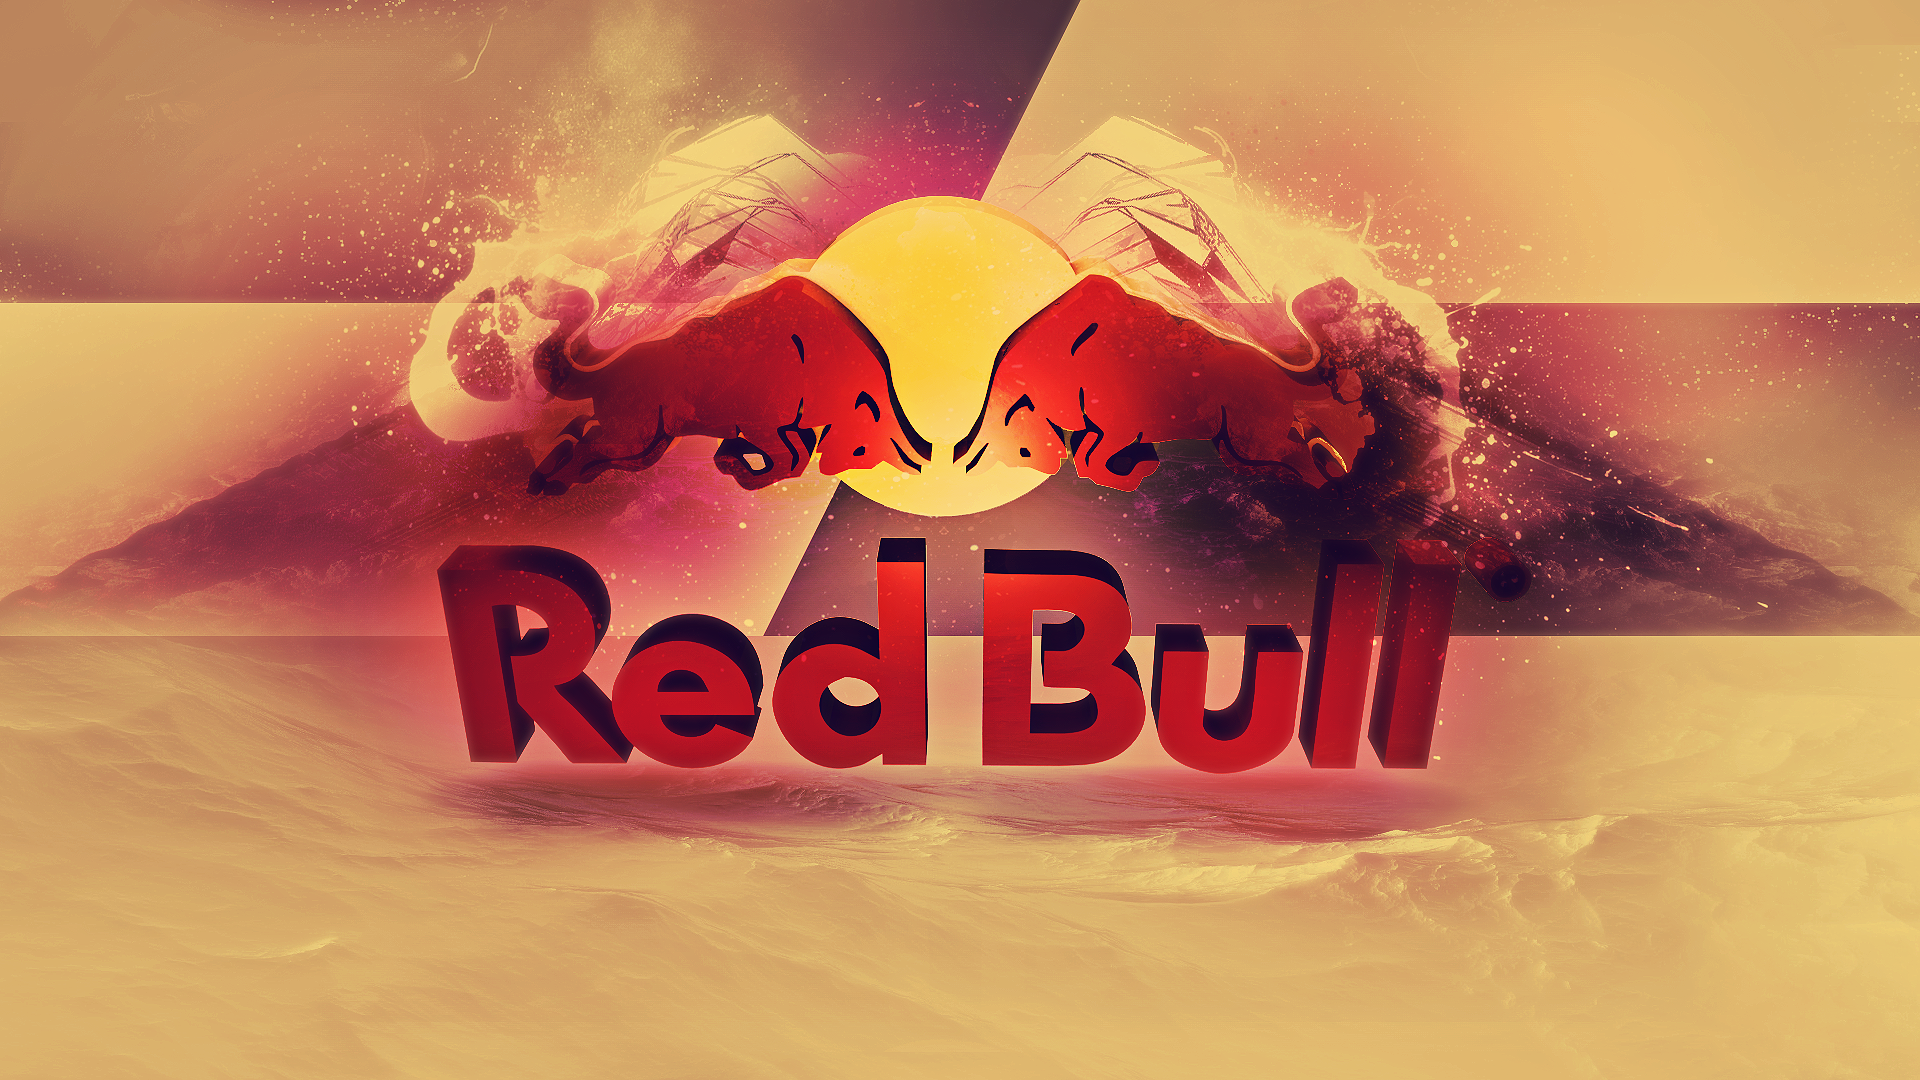 Red Bull Wallpaper by ChoLLo on DeviantArt